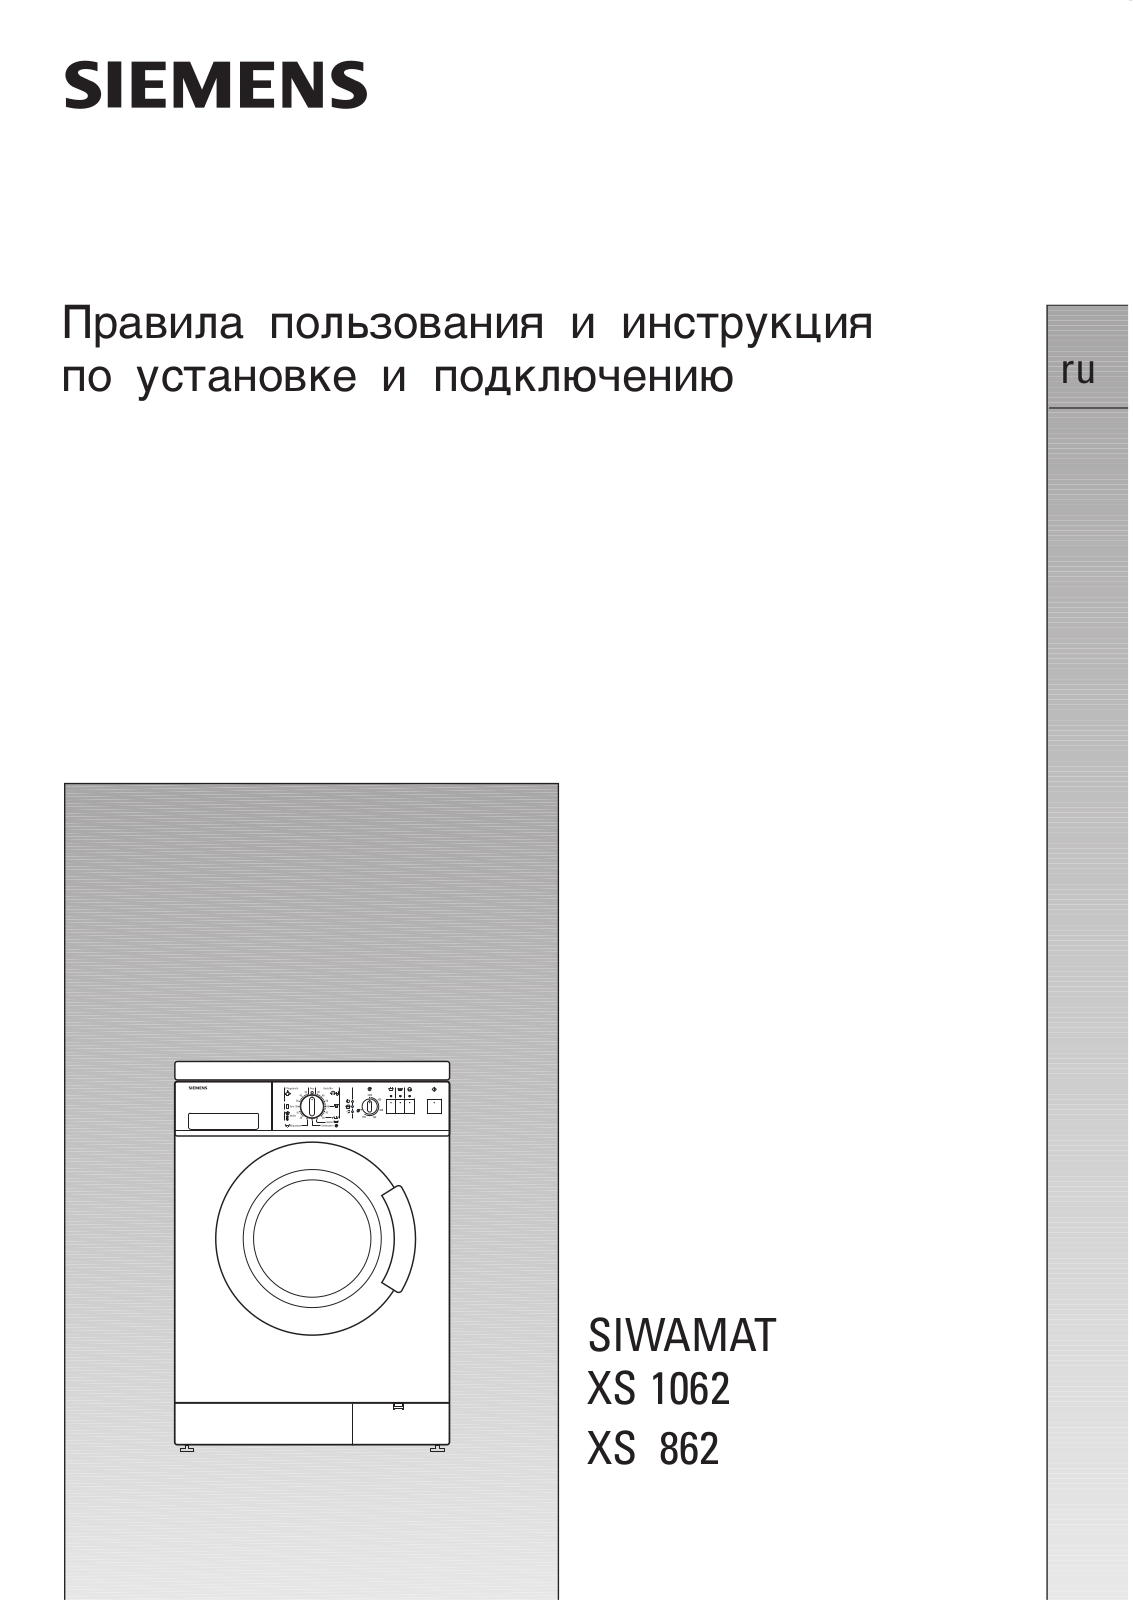 SIEMENS XS 862, XS 1062 User Manual